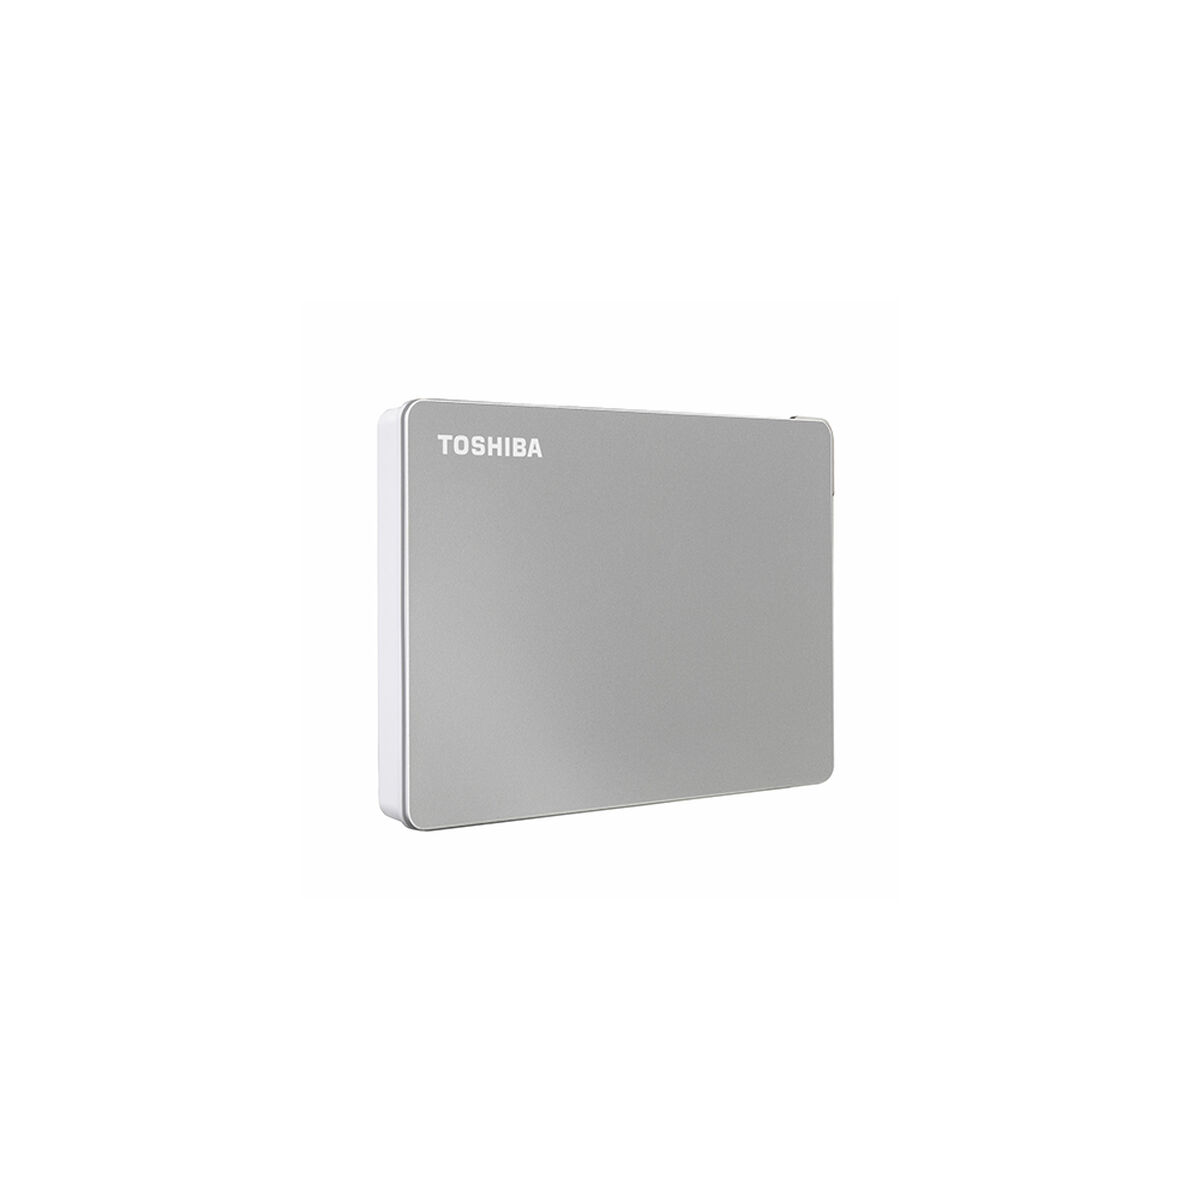 Disco Duro Externo Toshiba Canvio Flex 4TB Plateado